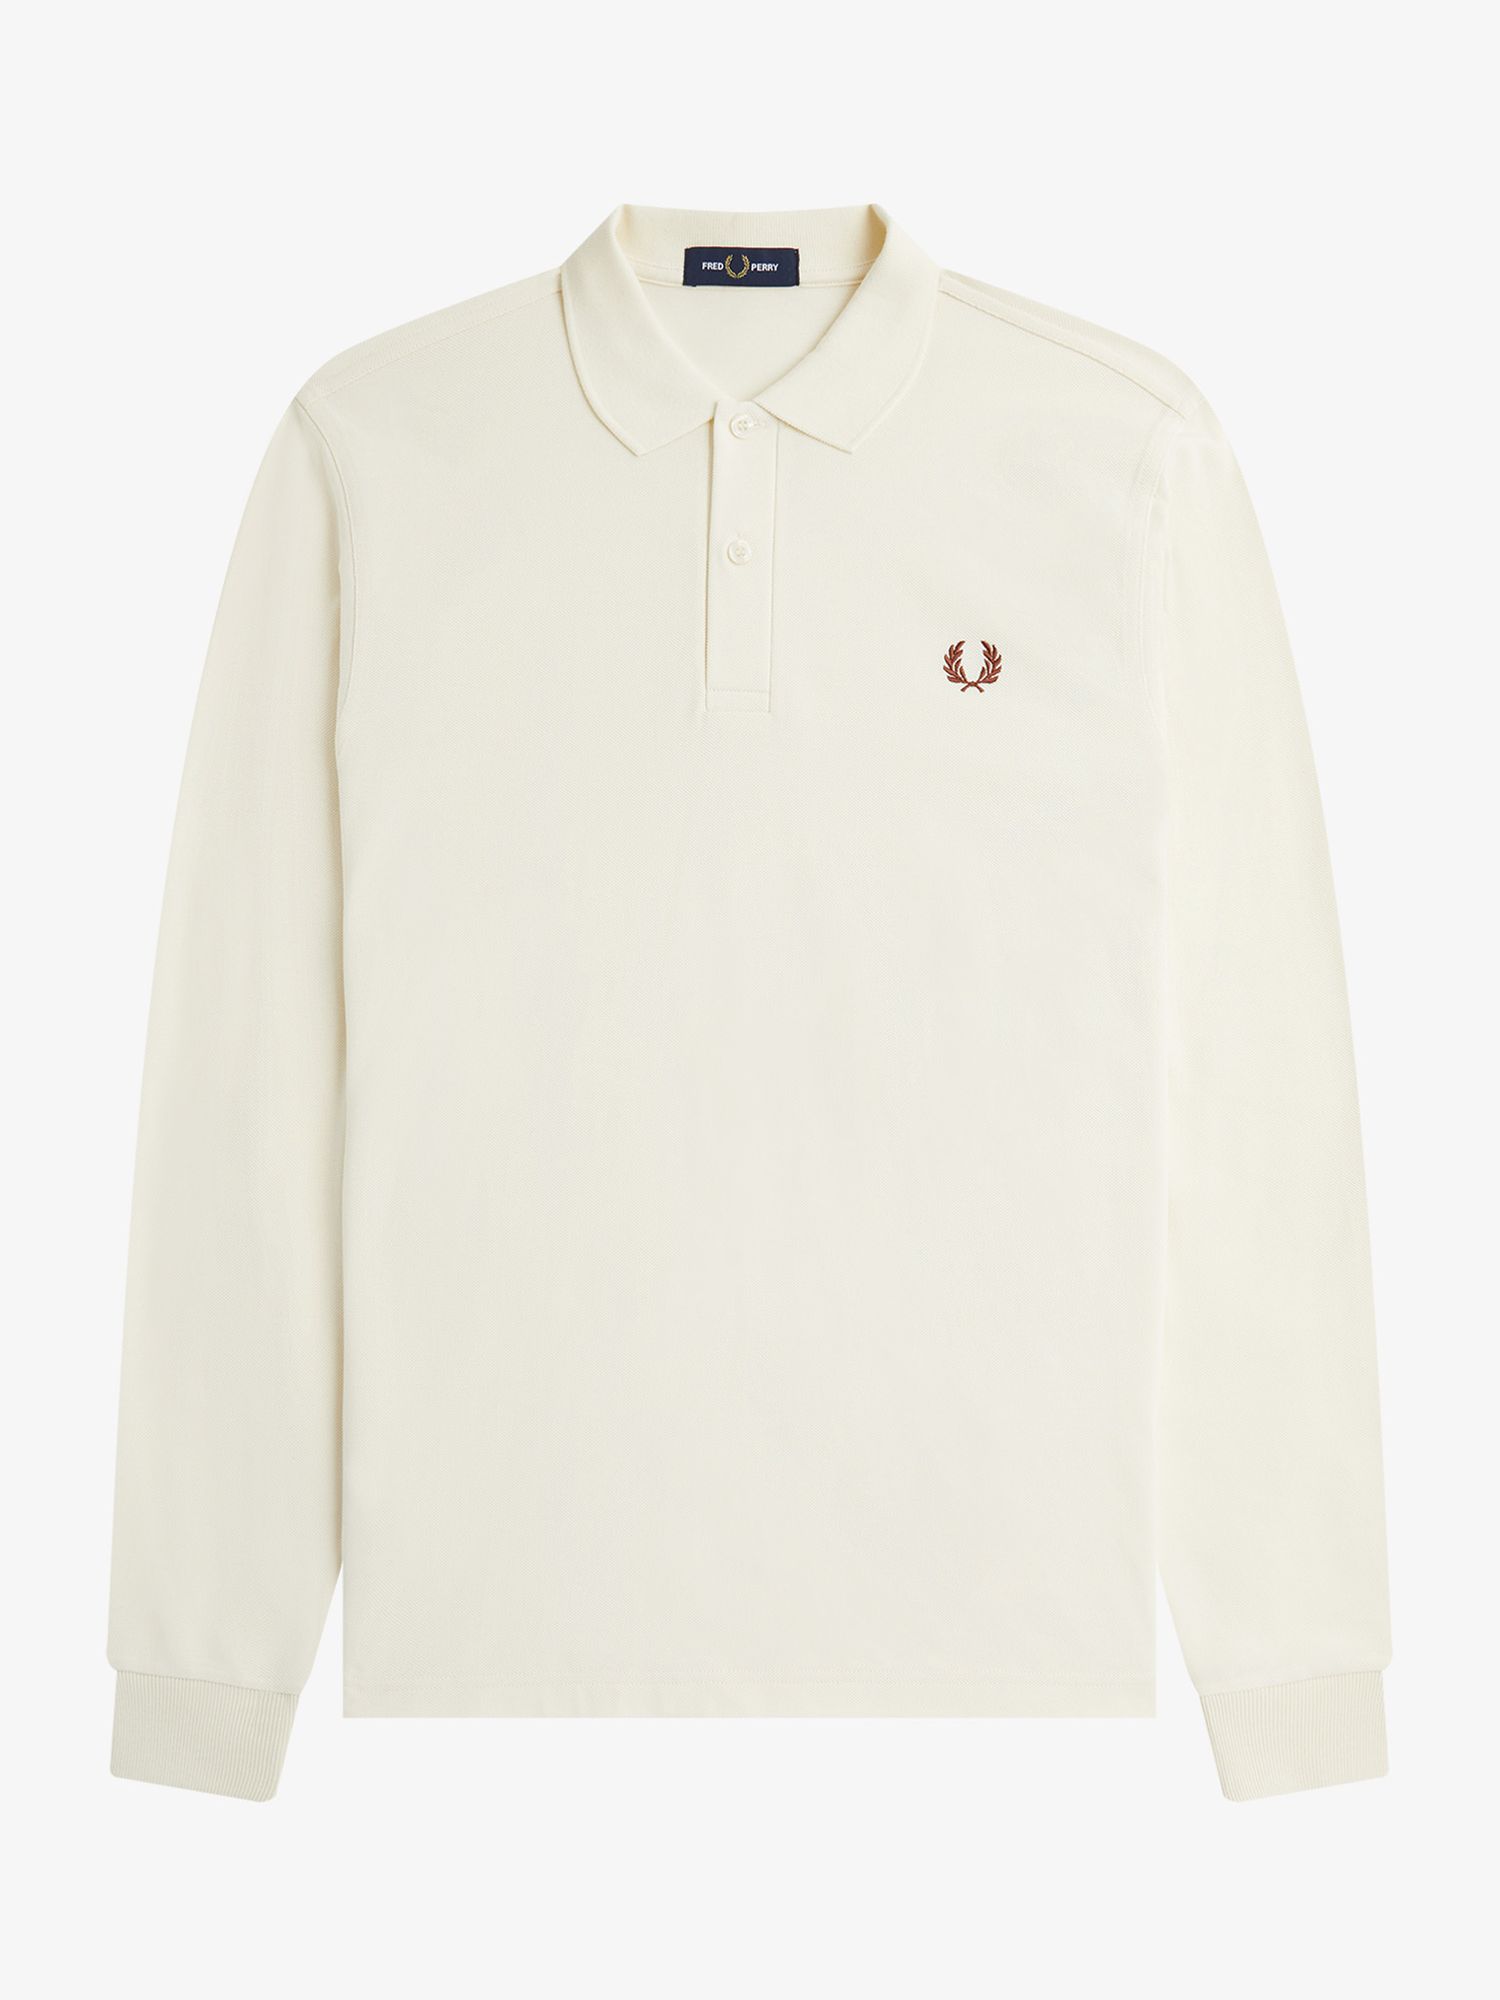 Fred Perry Long Sleeve Tennis Polo Shirt, Ecru, L